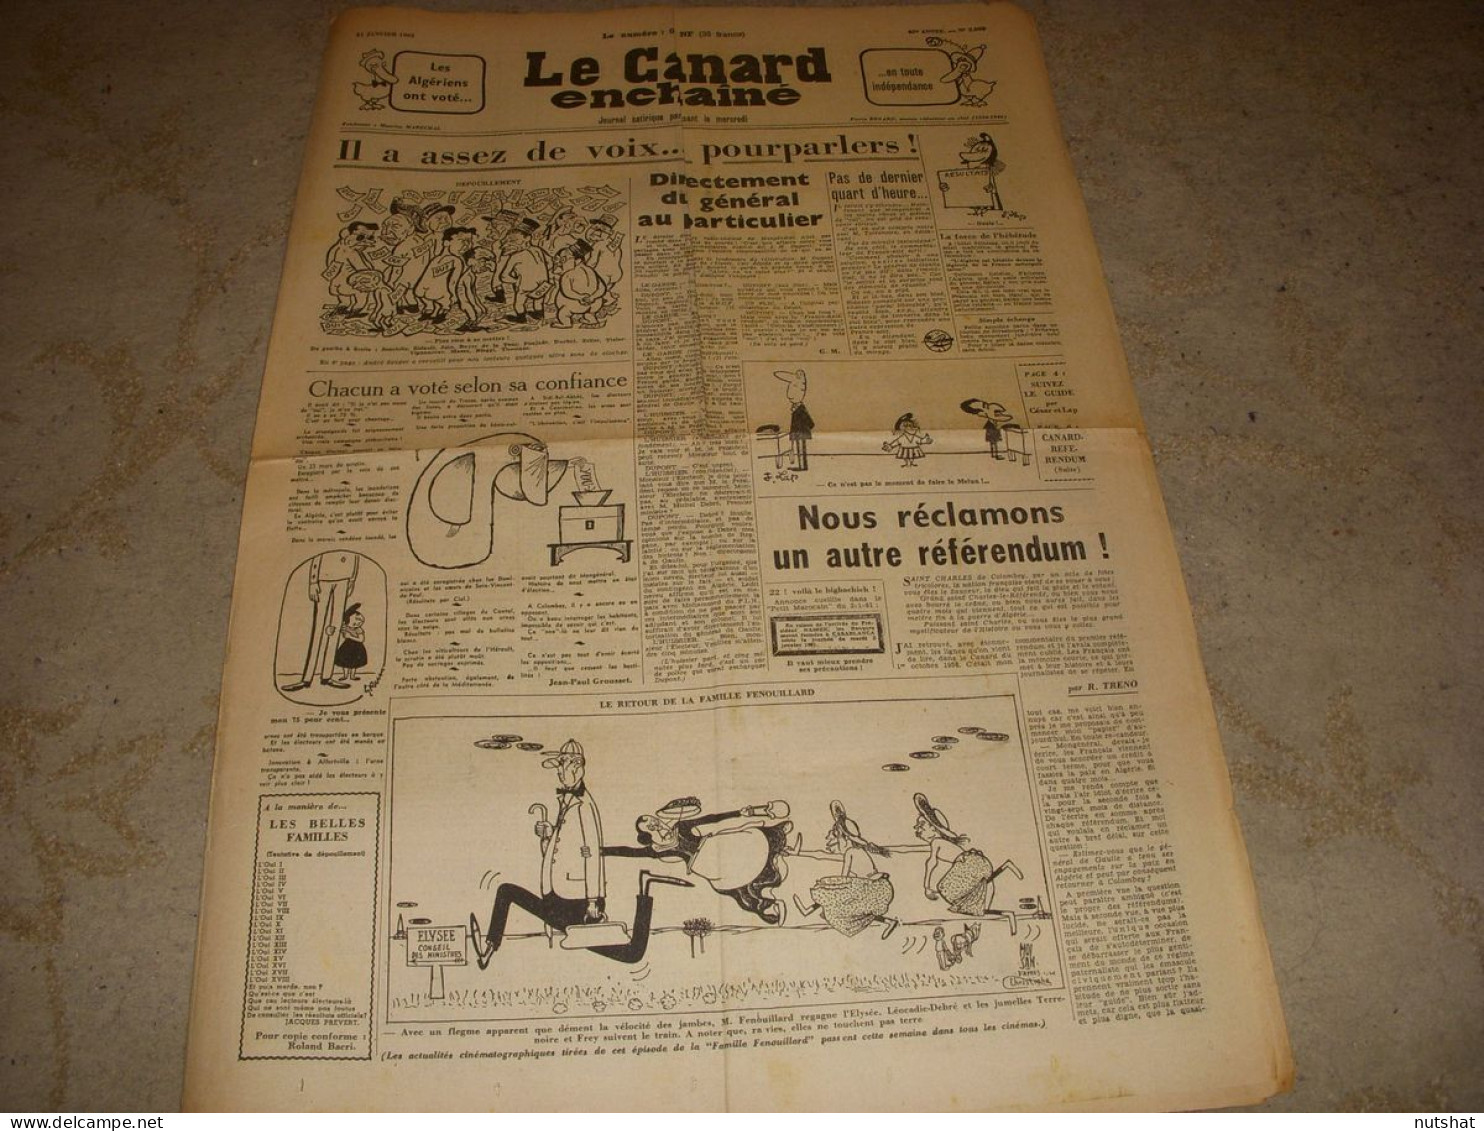 CANARD ENCHAINE 2099 11.01.1961 Jean Christophe AVERTY Jacques SALLEBERT - Politica